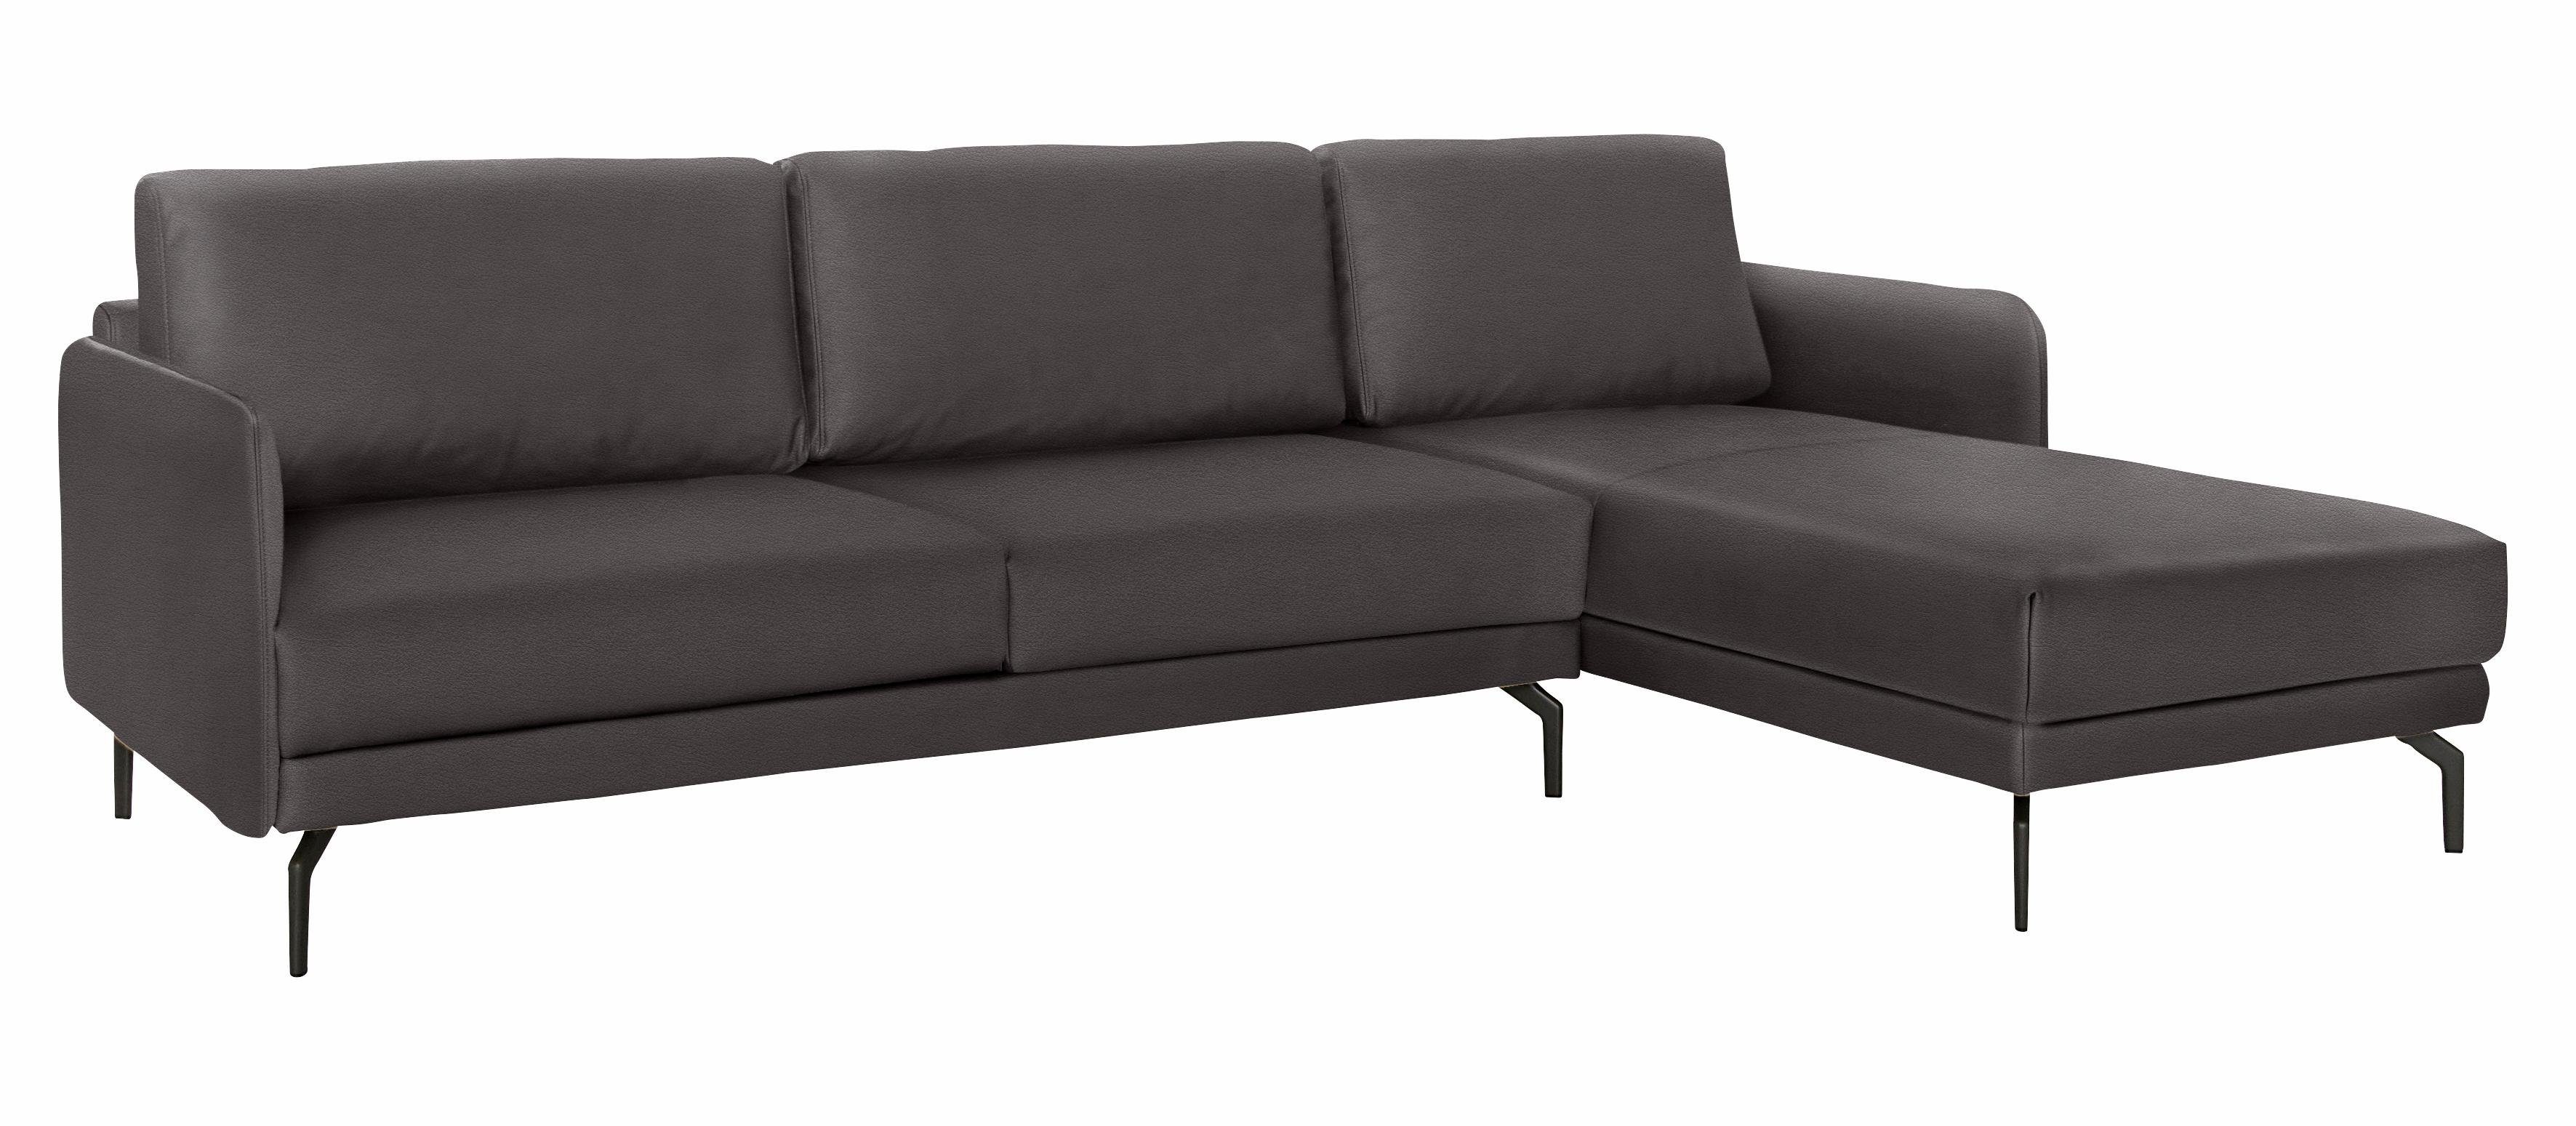 Breite sofa Armlehne Ecksofa sehr cm, schmal, hs.450, hülsta Alugussfuß 274 Umbragrau